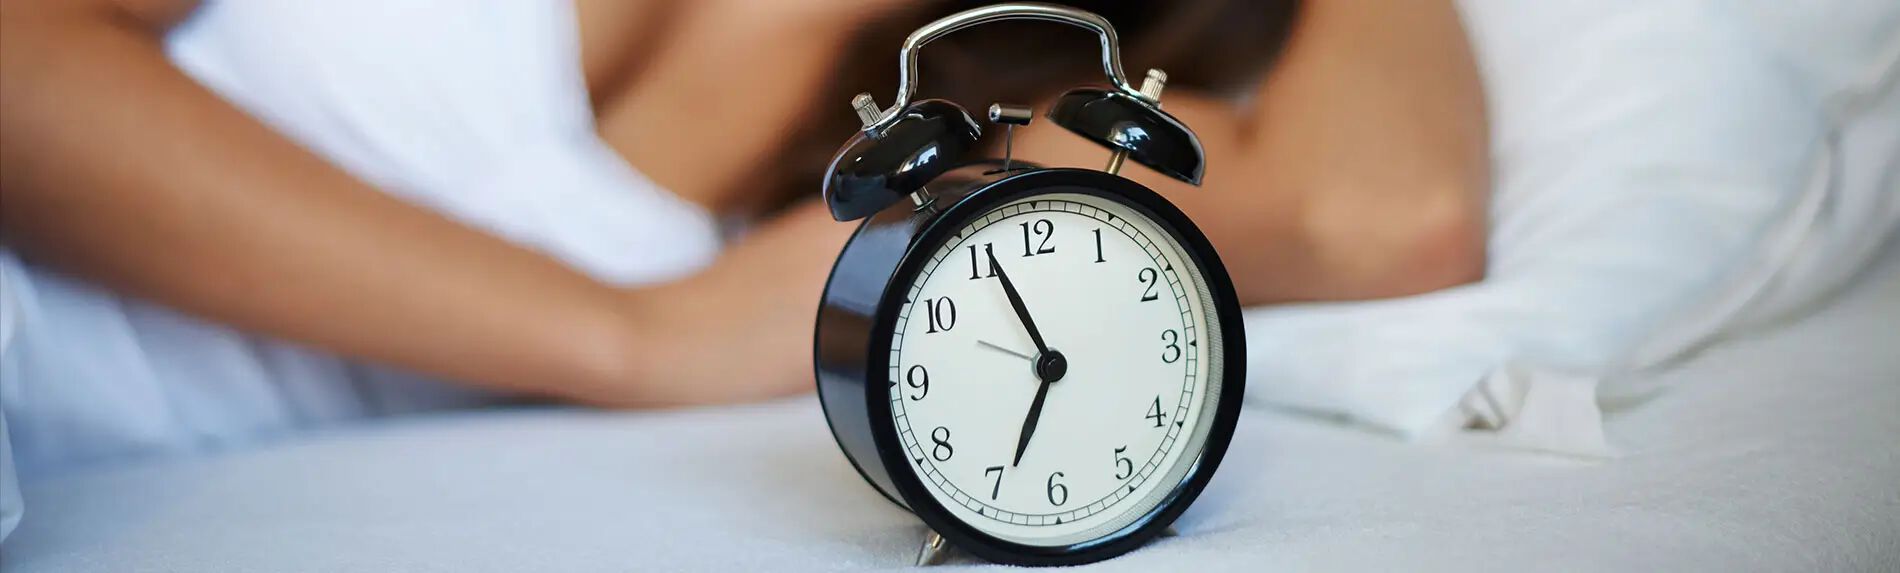 How to reset your sleep clock?